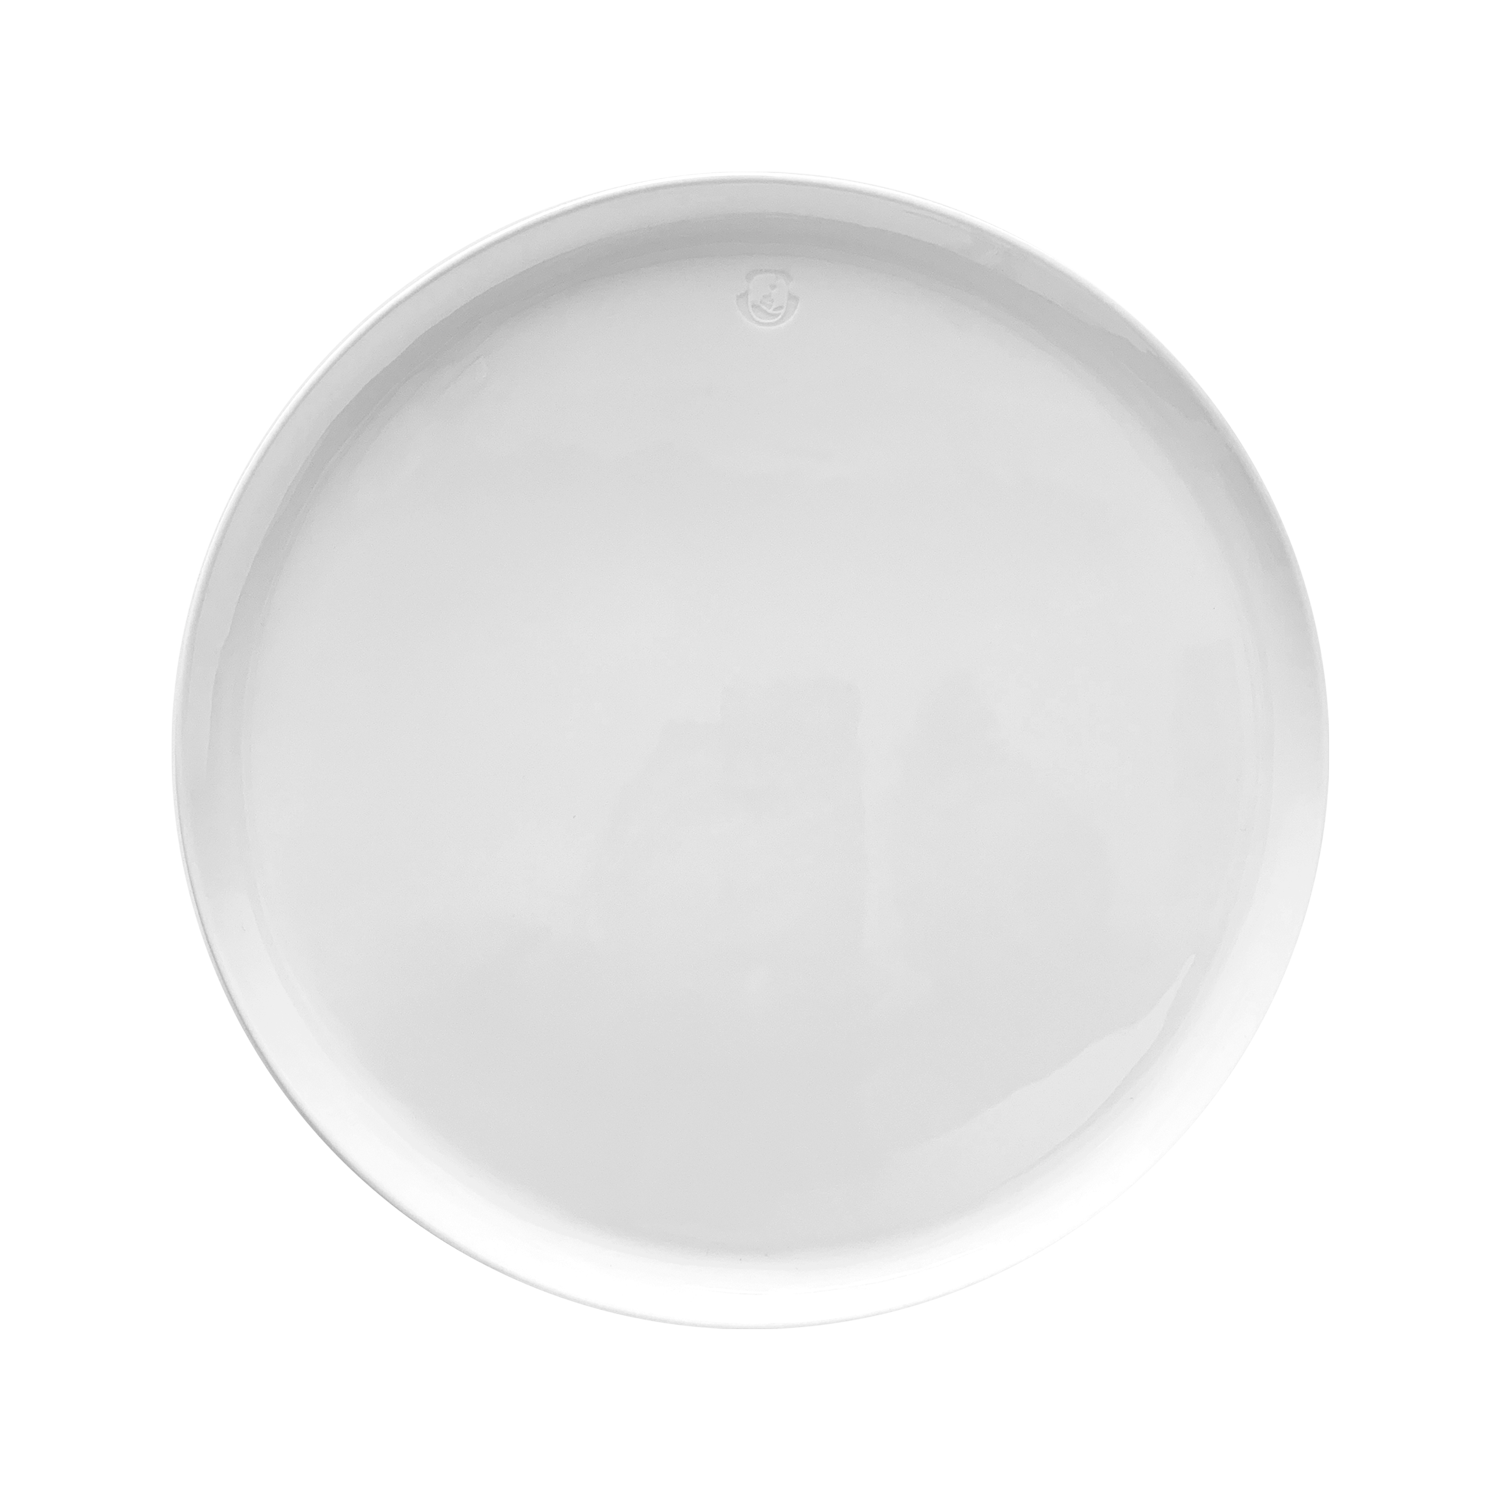 KAY plate